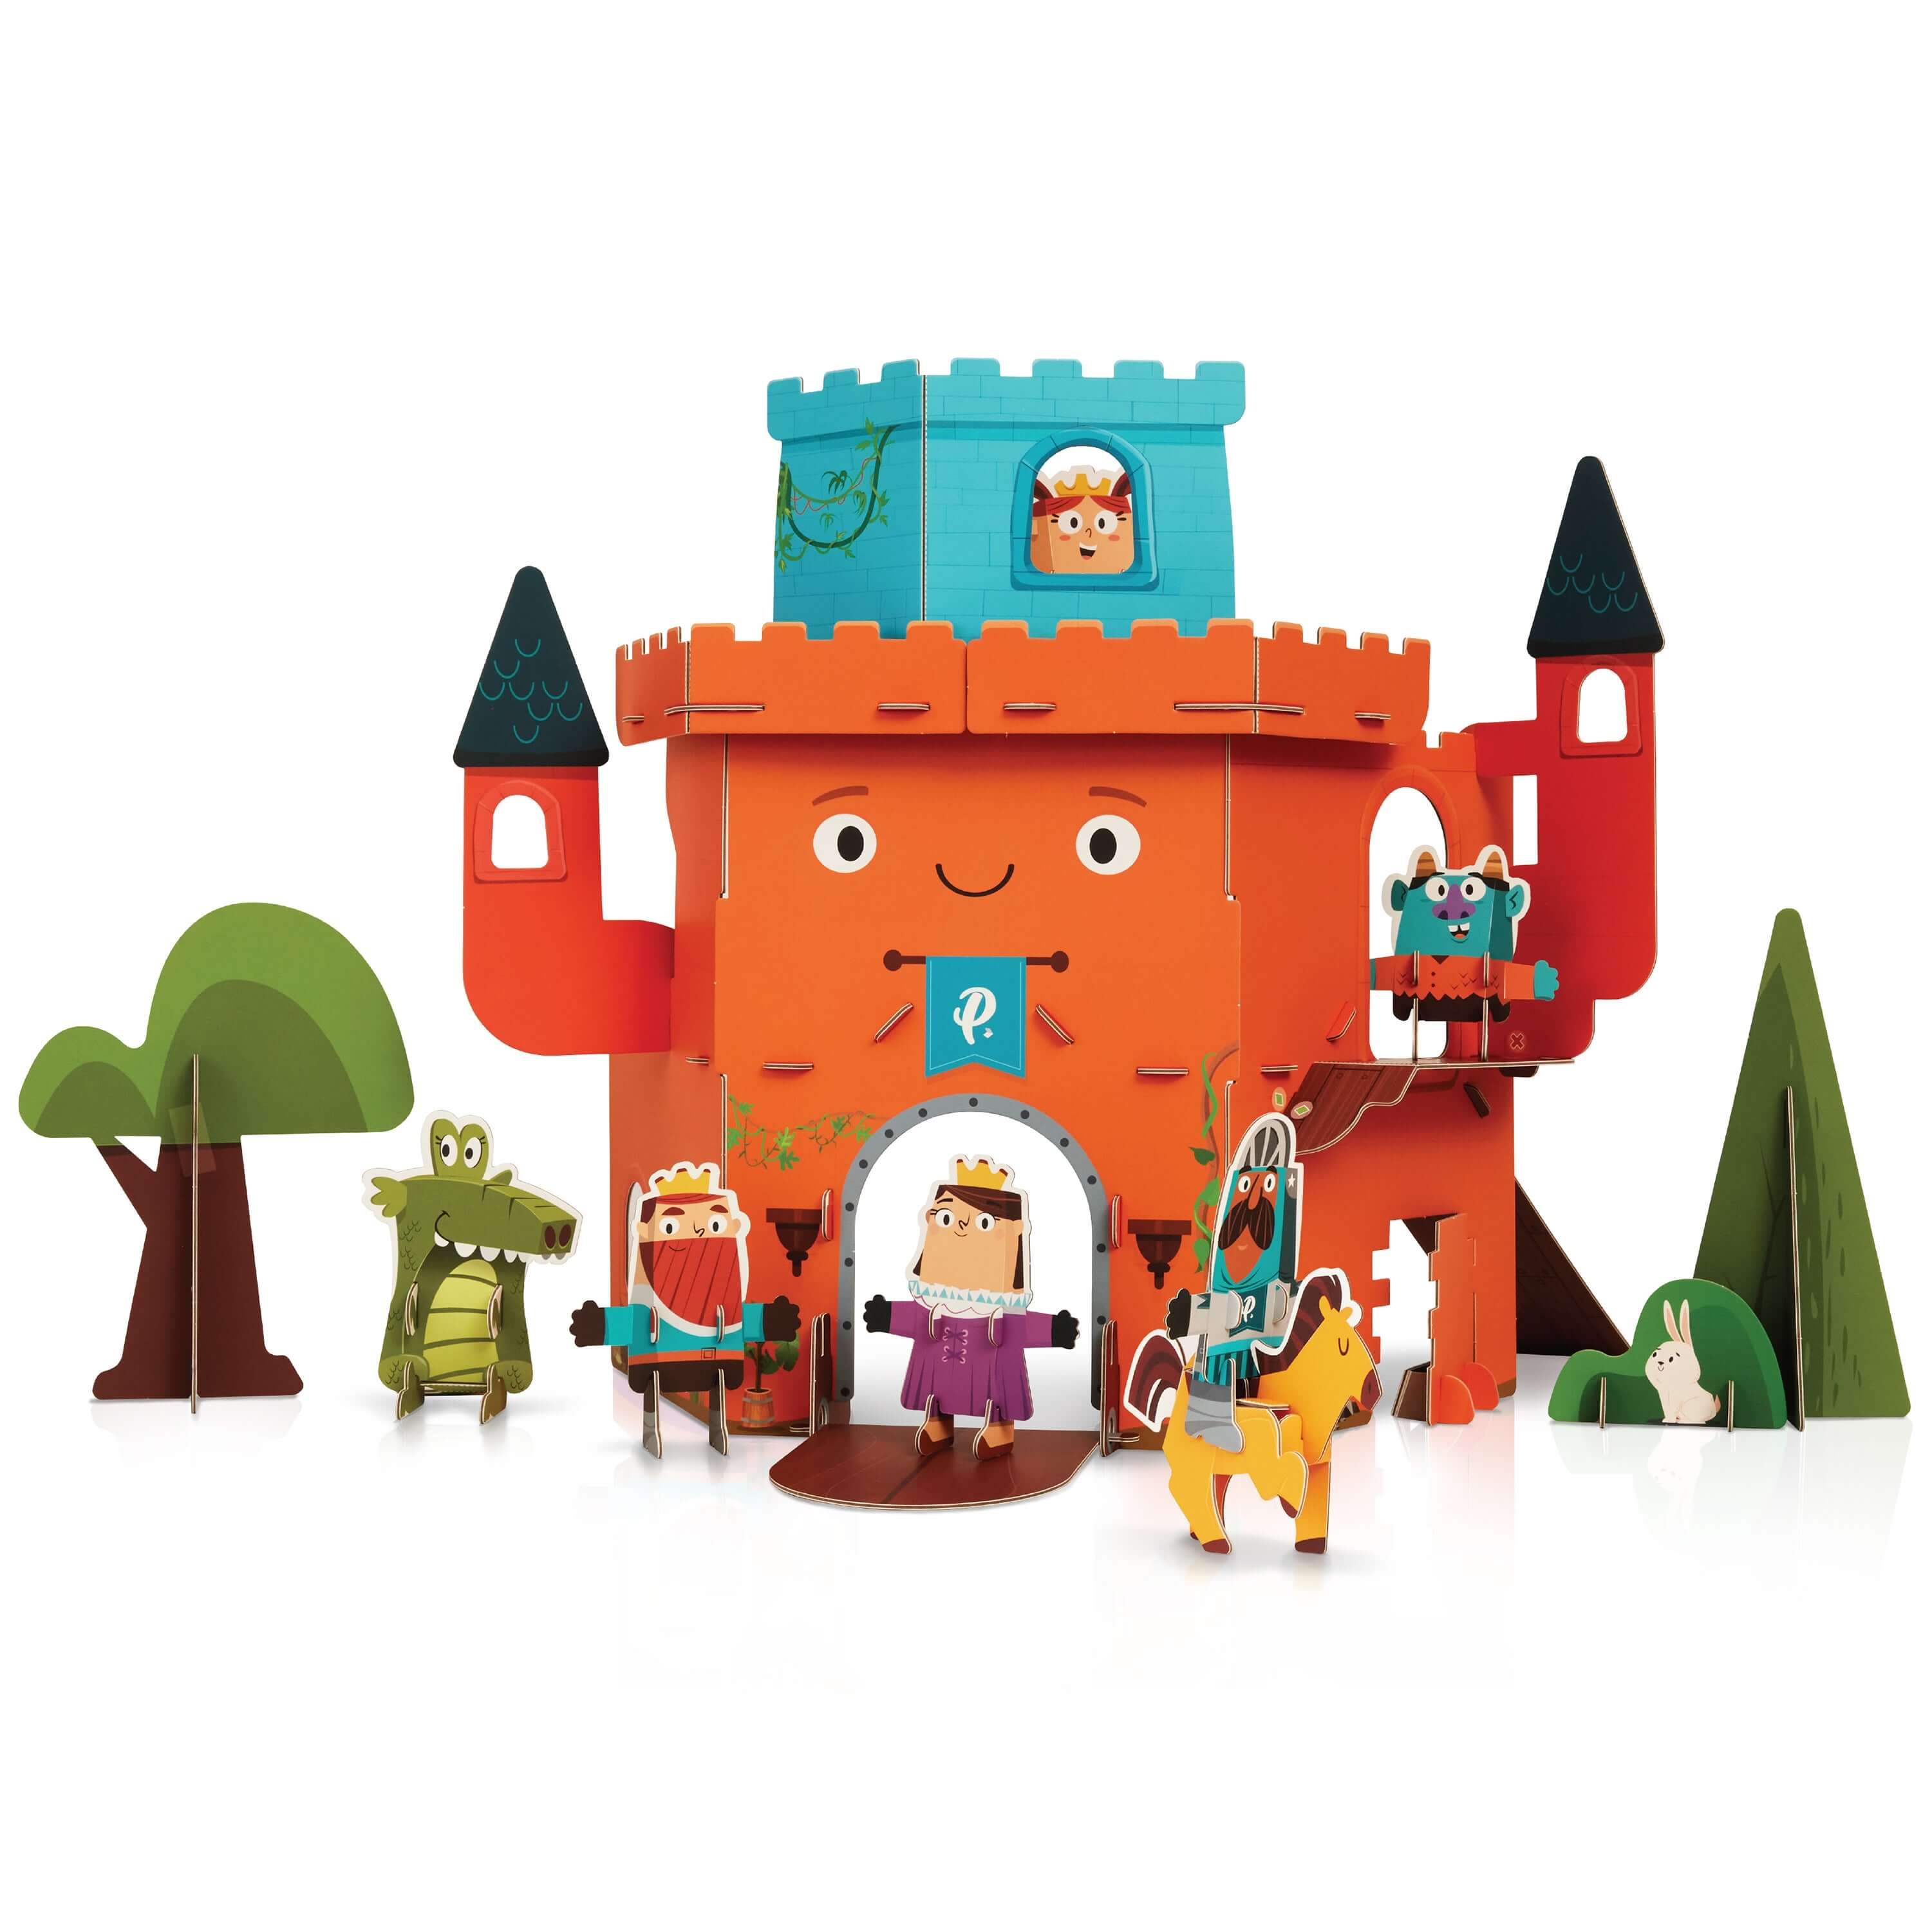 Playper Curious Kingdom Castle Playset for Kids